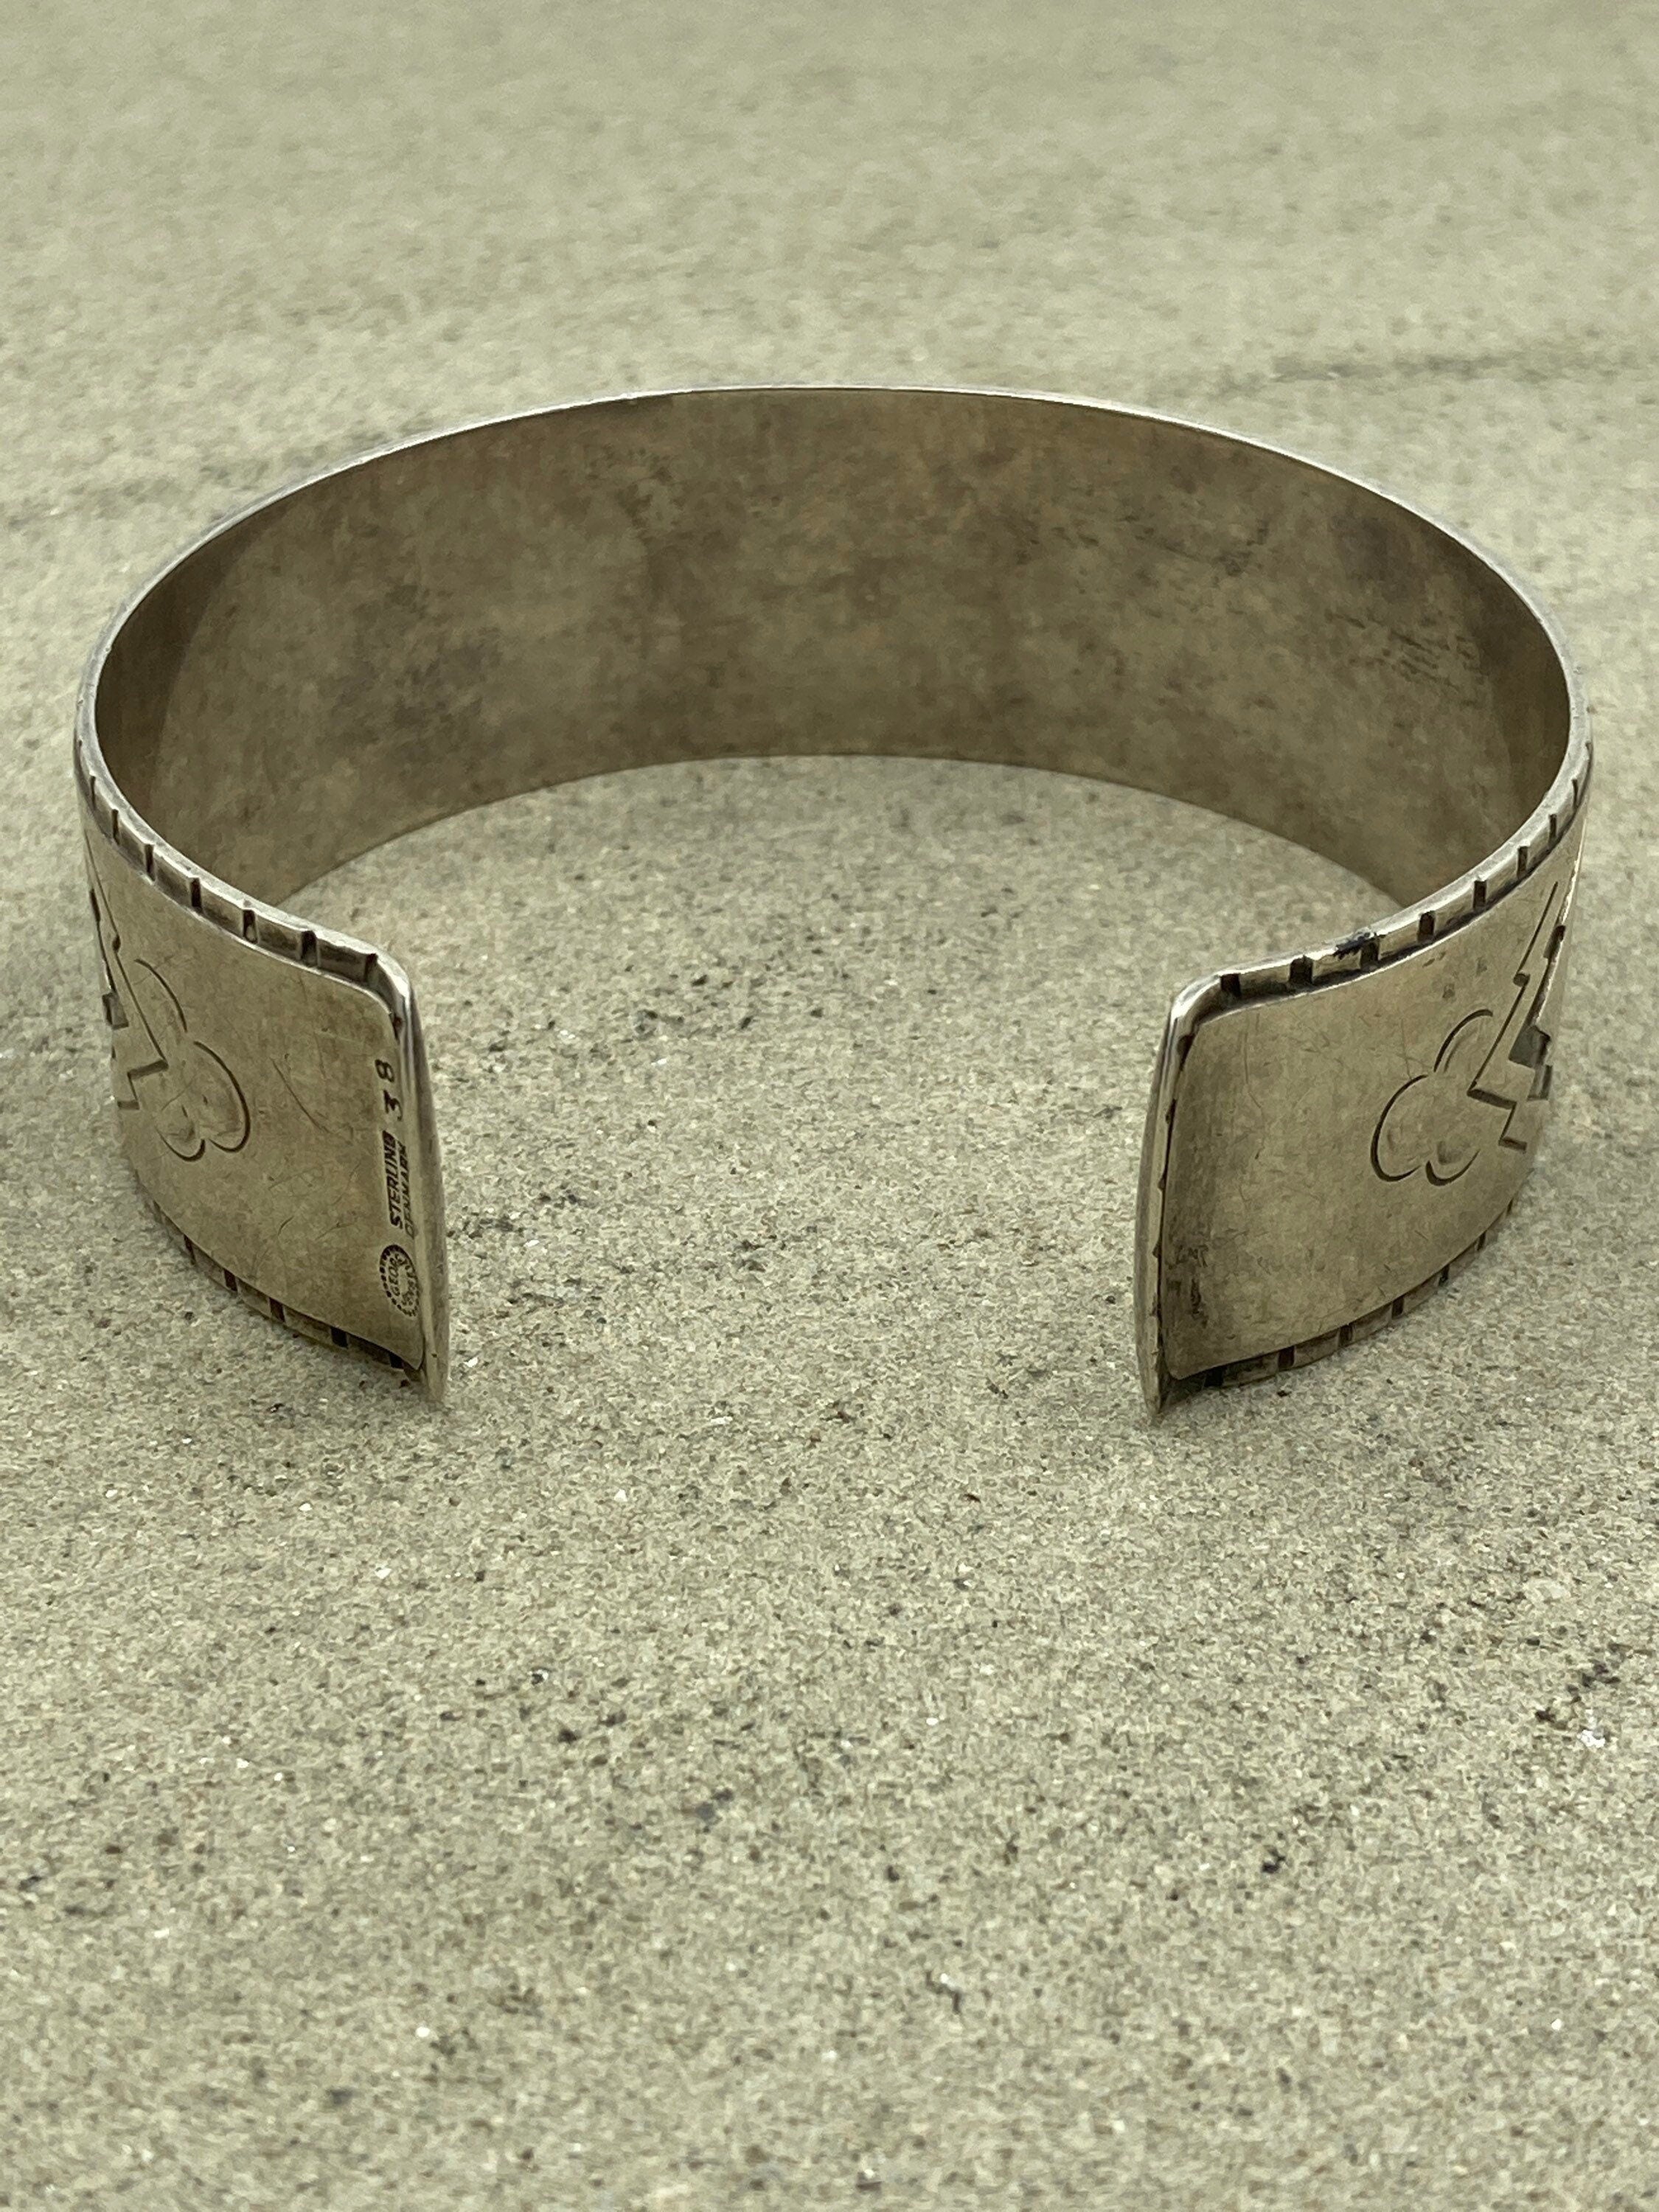 Vintage georg jensen cuff bangle bracelet no. 38 art deco motifs signed post 1945 mark